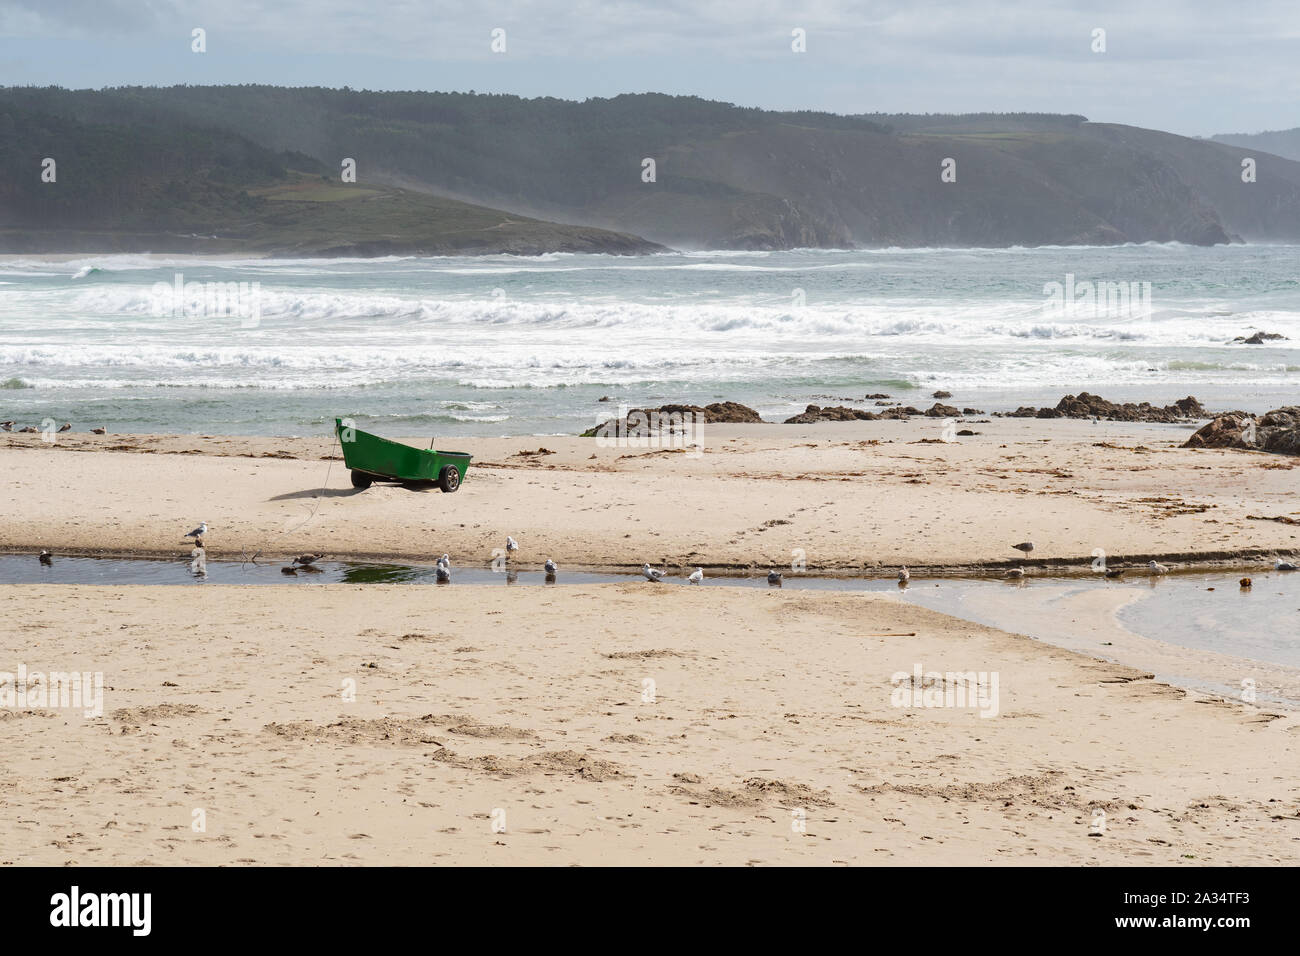 Nemina surfing beach, Muxia, Galicia, Costa da Morte, Spain Stock Photo